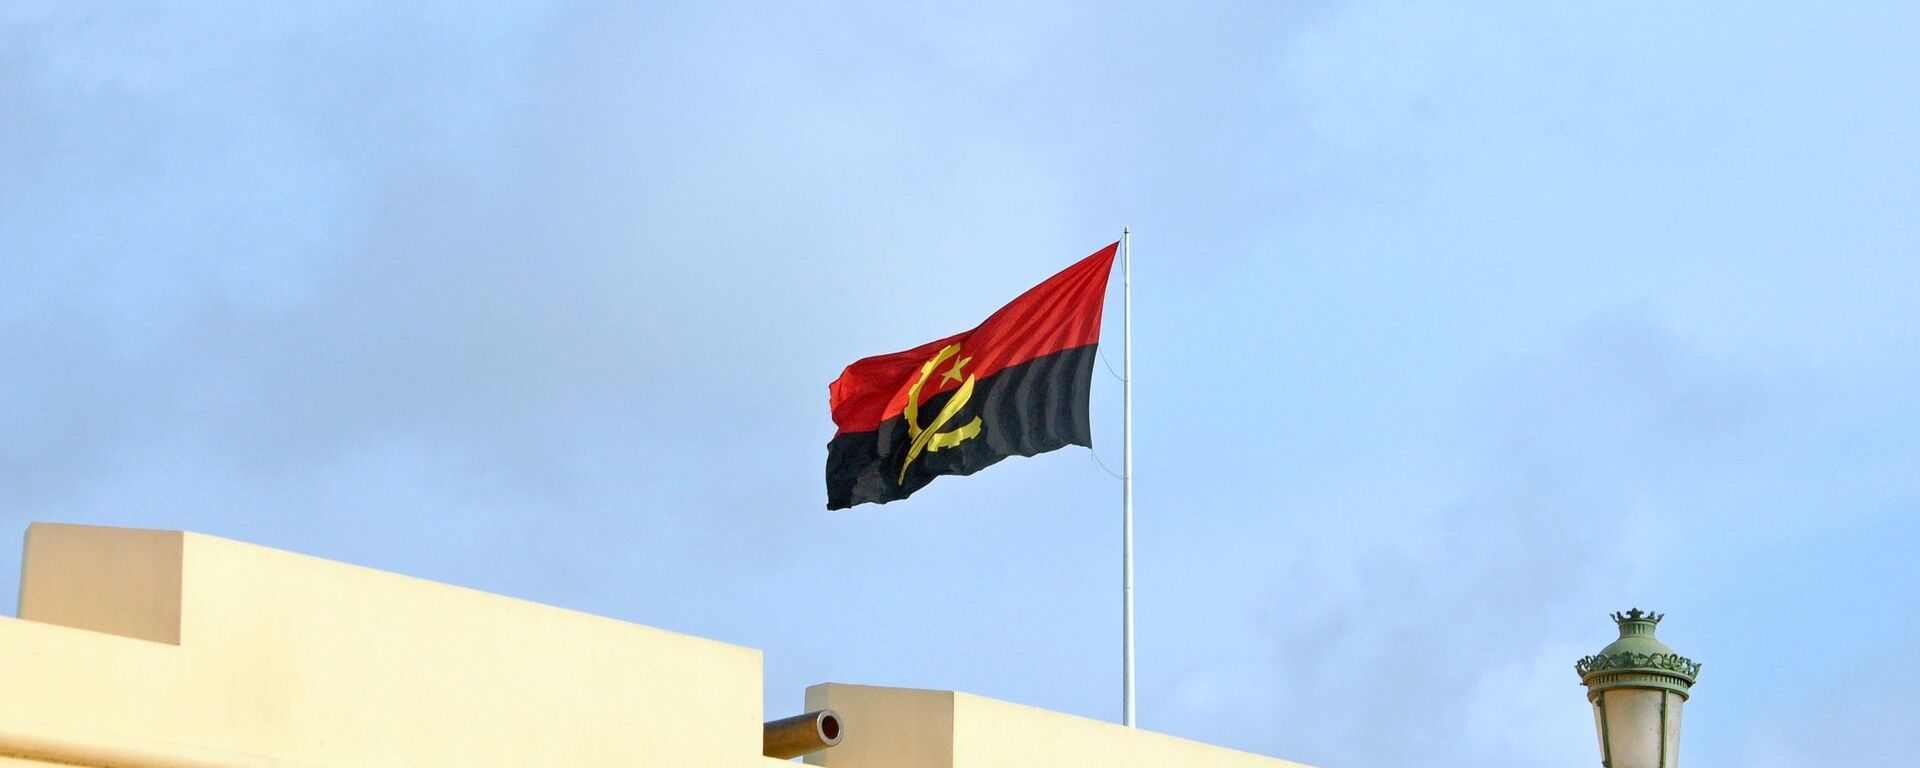 La bandera de Angola - Sputnik Mundo, 1920, 27.08.2022